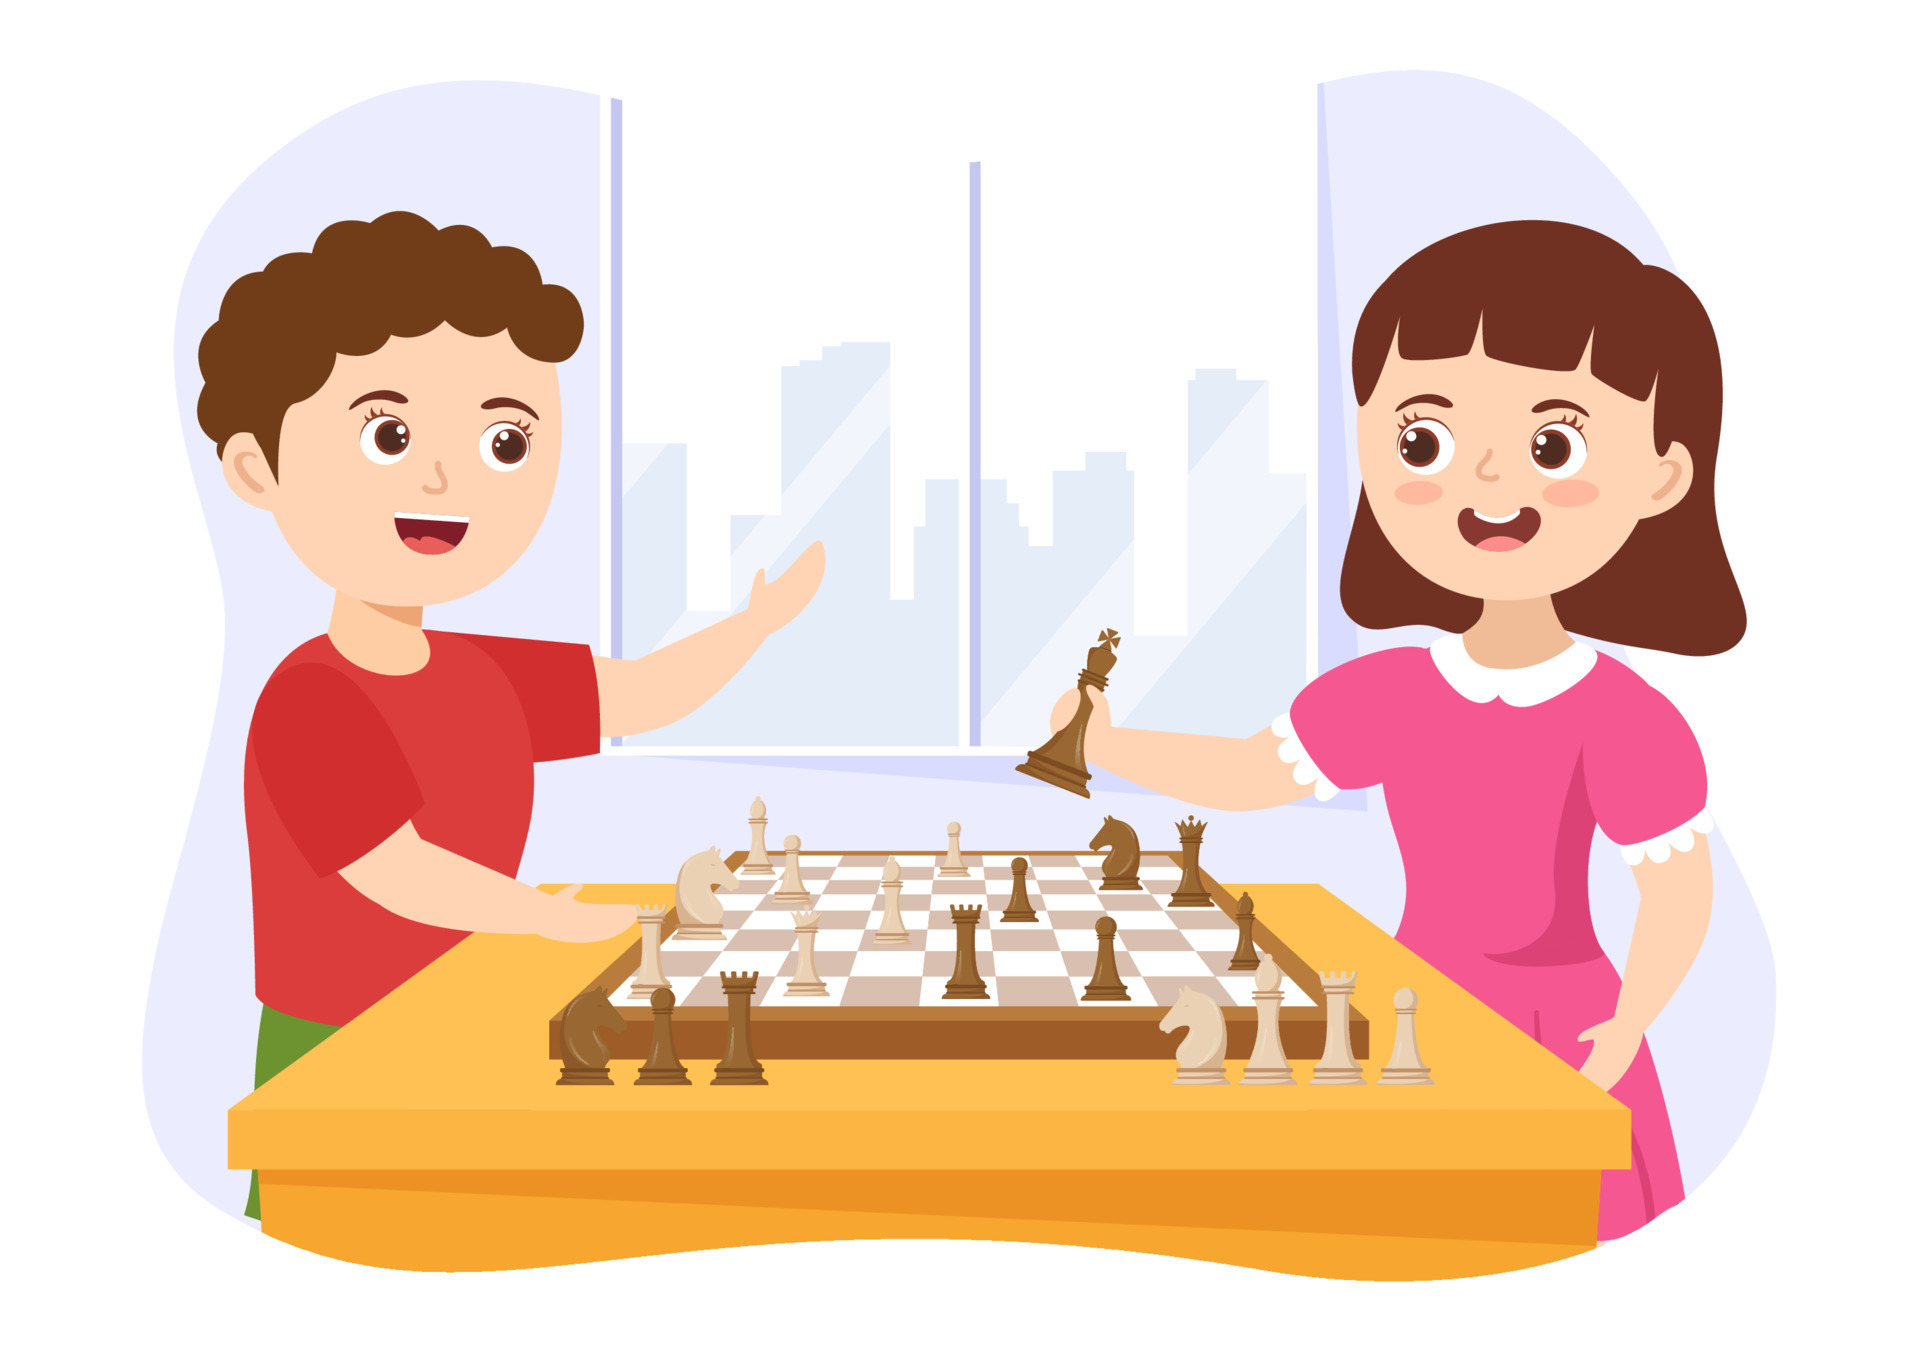 Tabuleiro de xadrez de desenhos animados com peças de xadrez